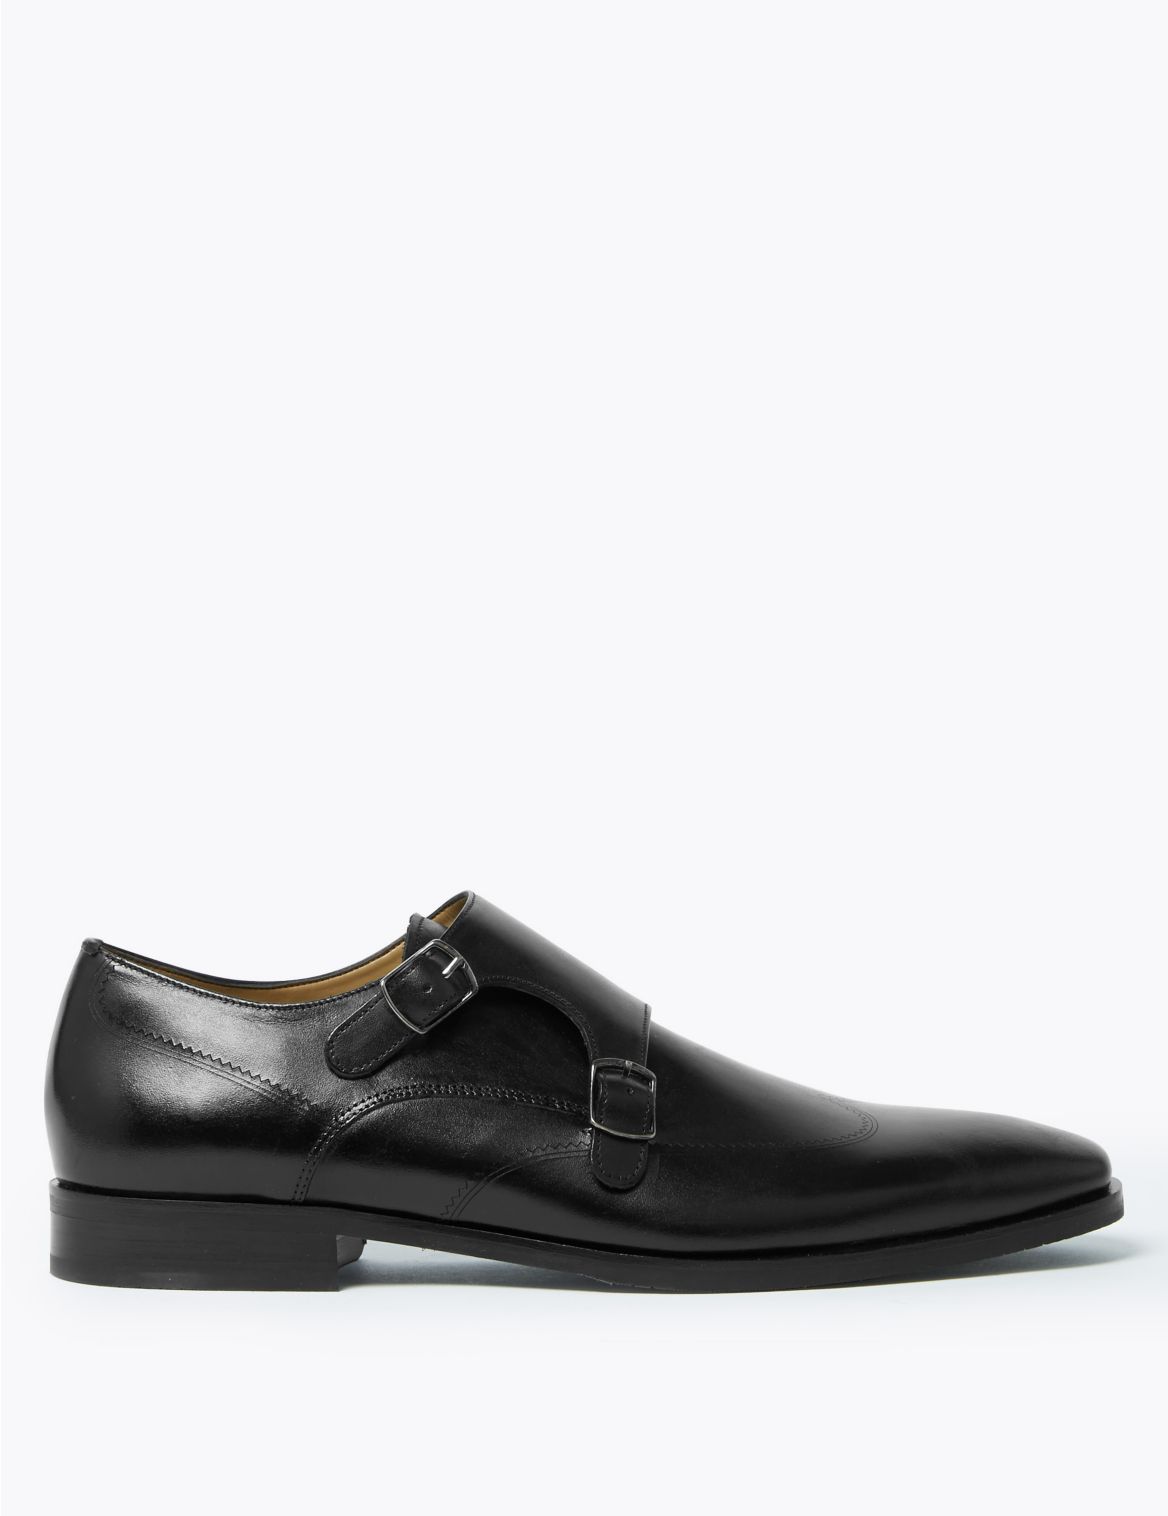 Leather Double Monk Strap Shoes black